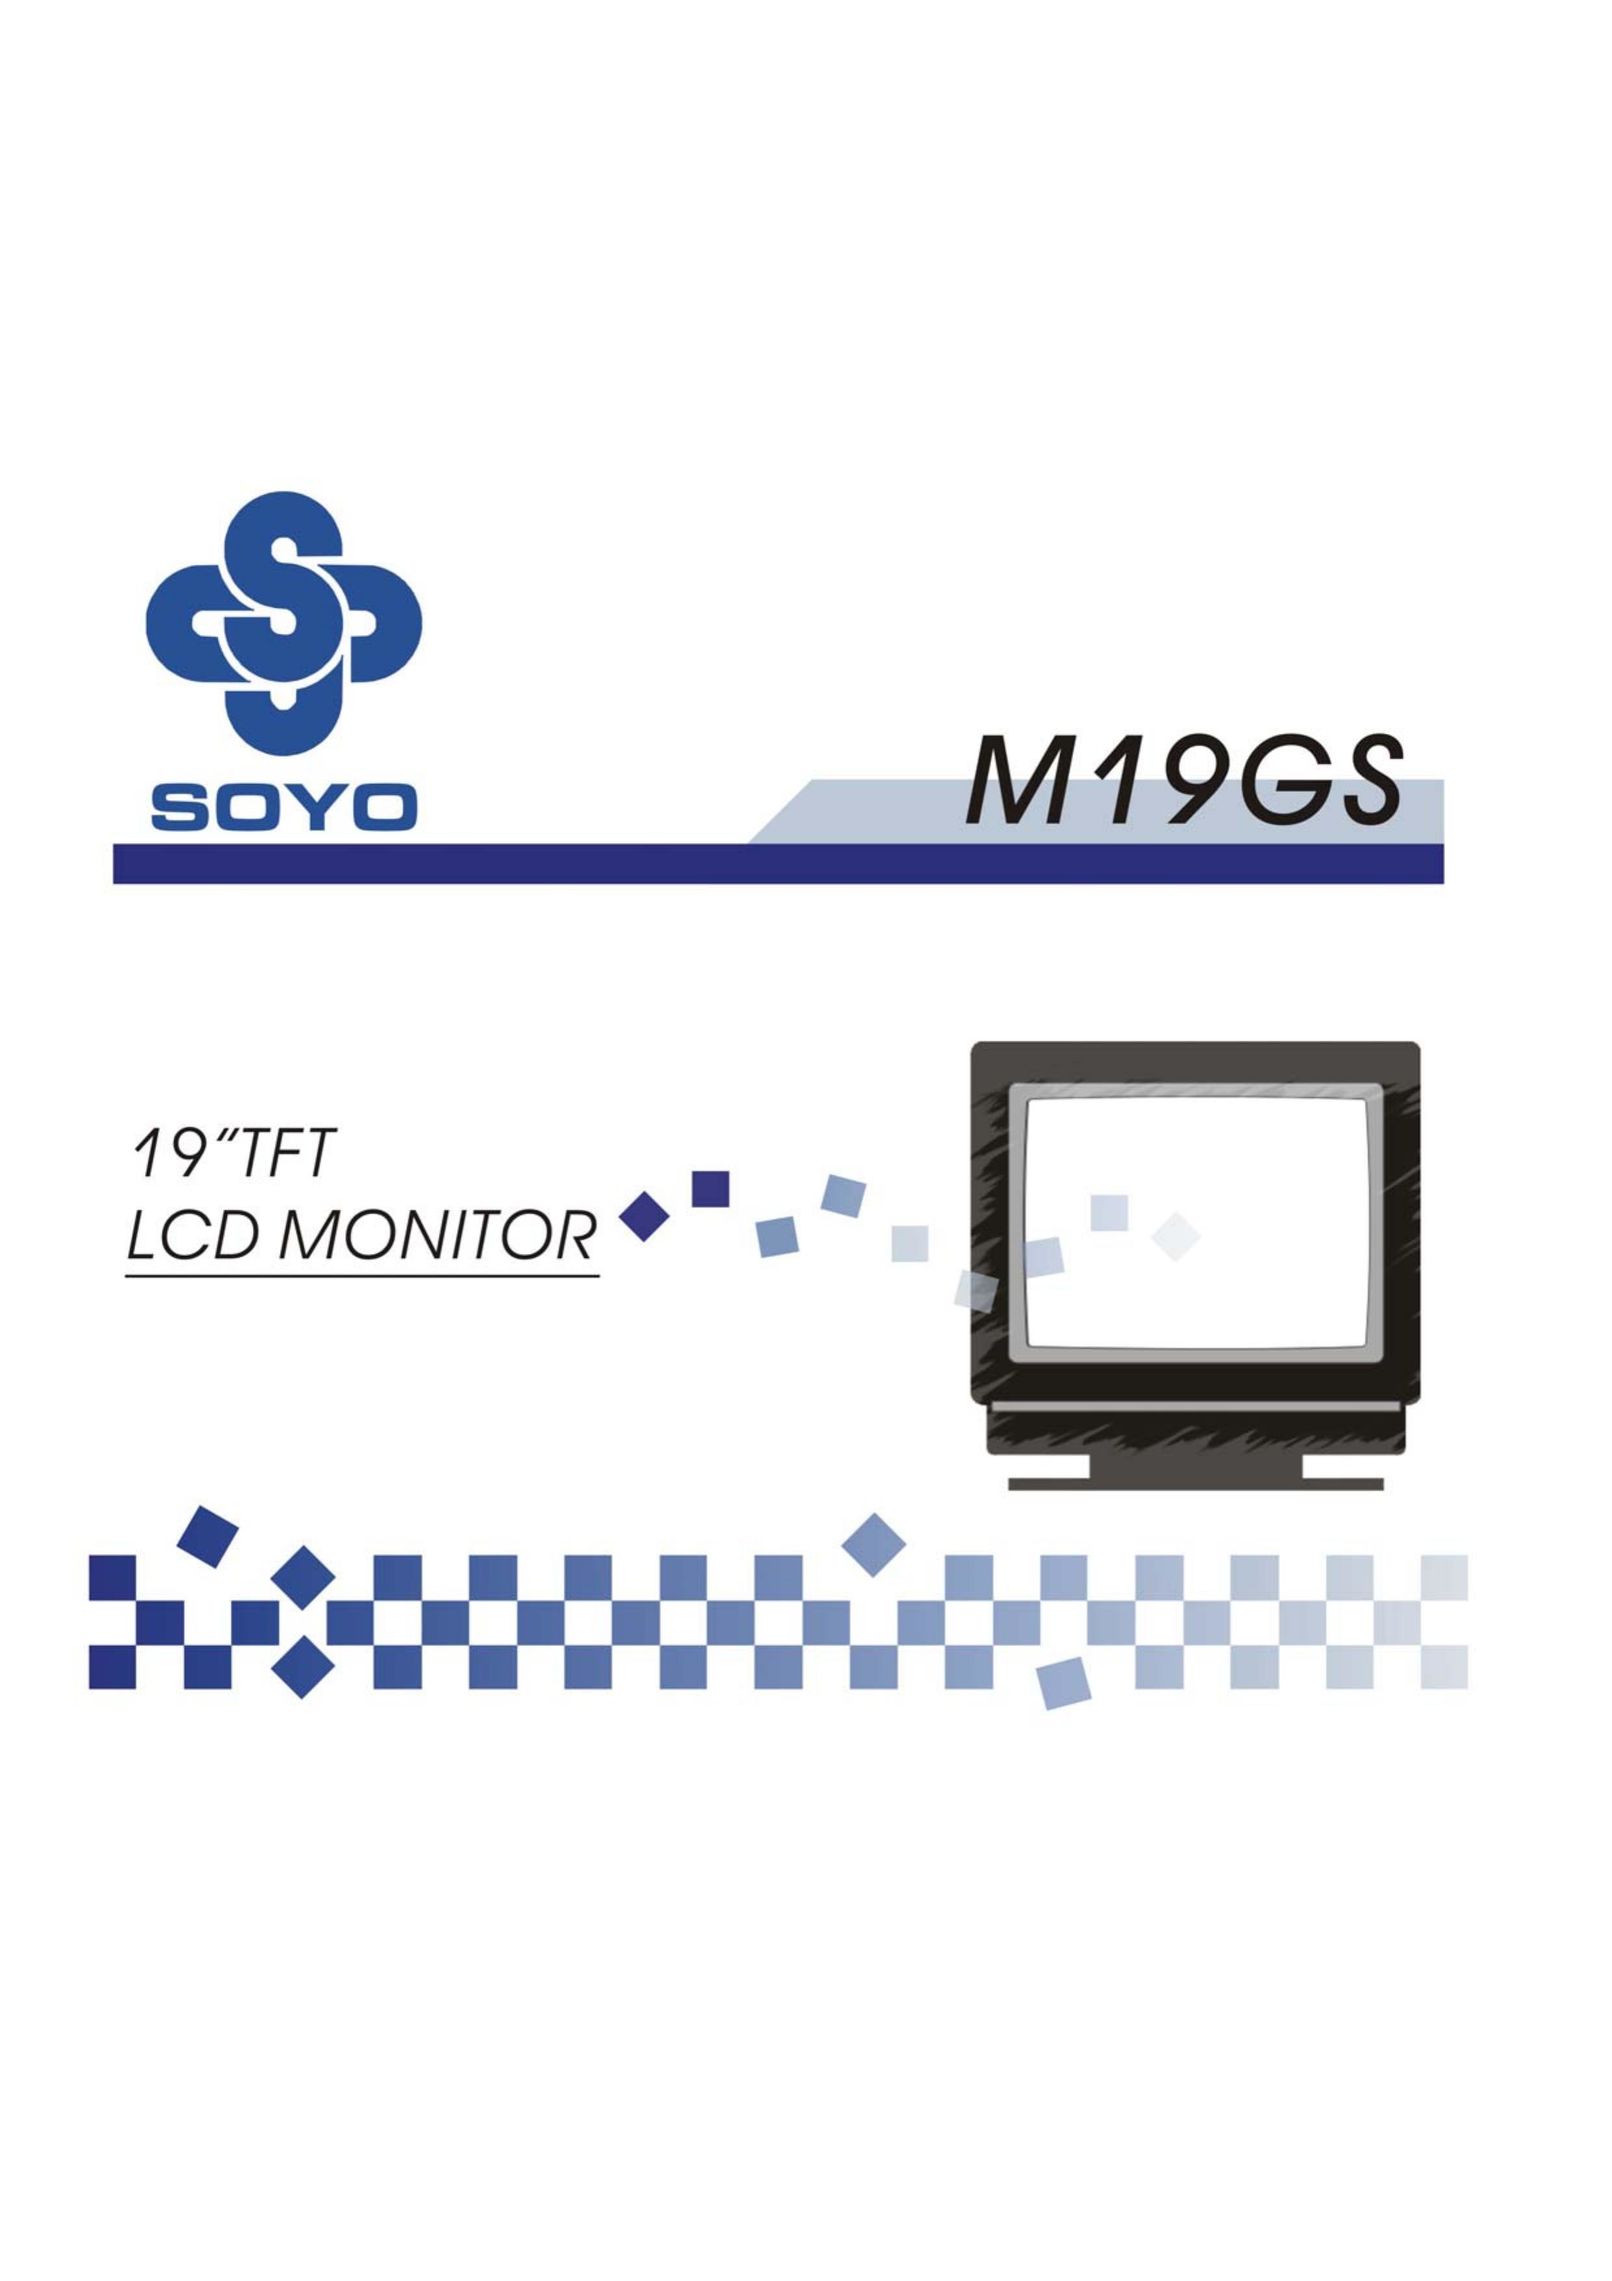 SOYO M19GS Car Video System User Manual